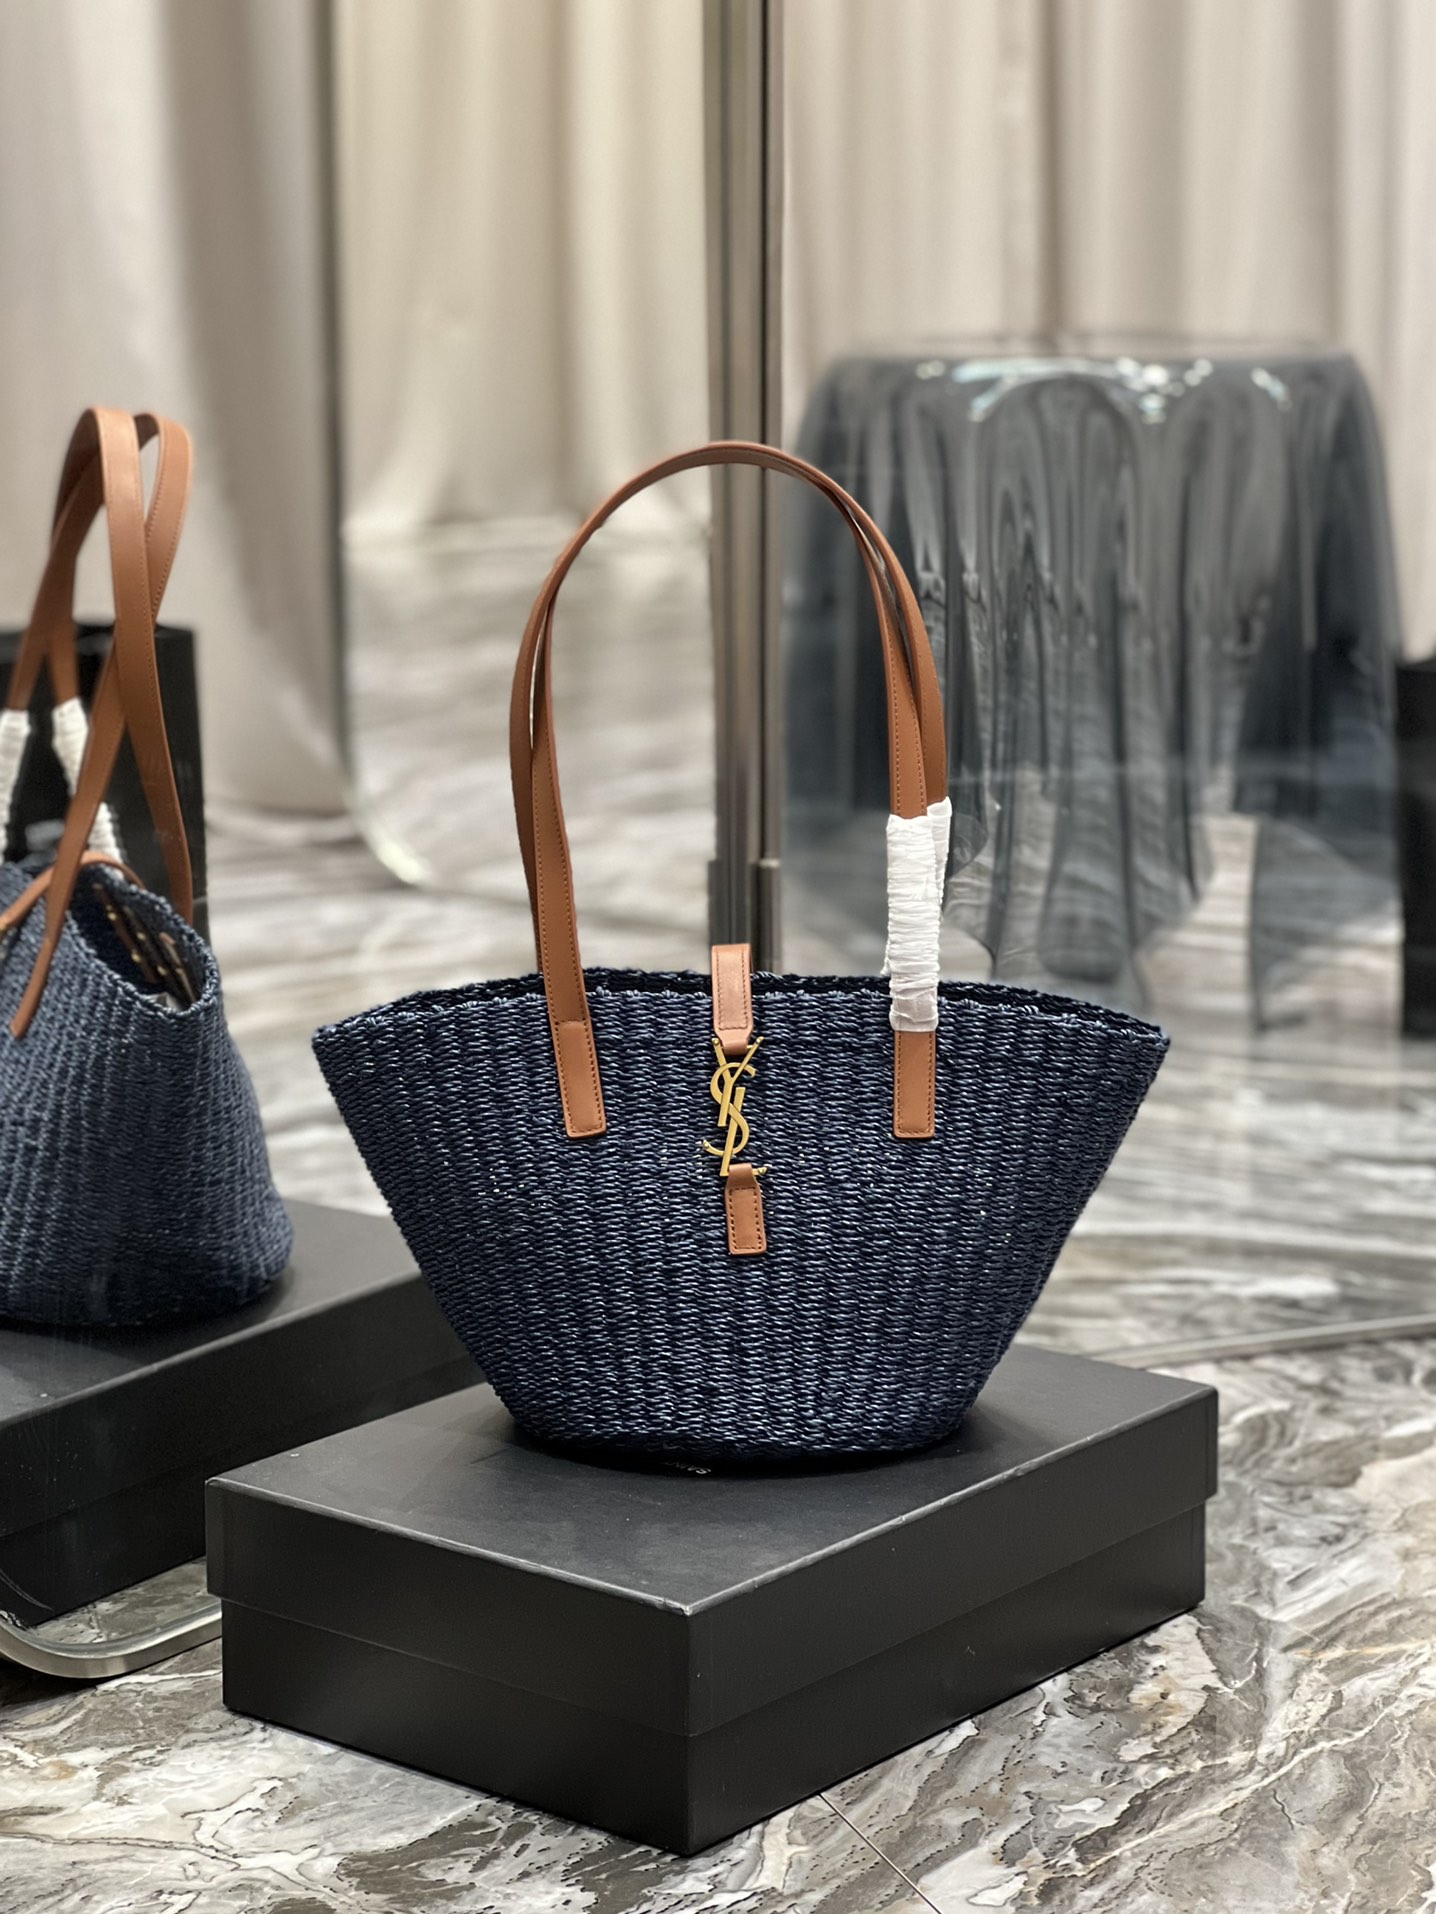 Yves Saint Laurent Handbags Tote Bags Black Weave Raffia Straw Woven